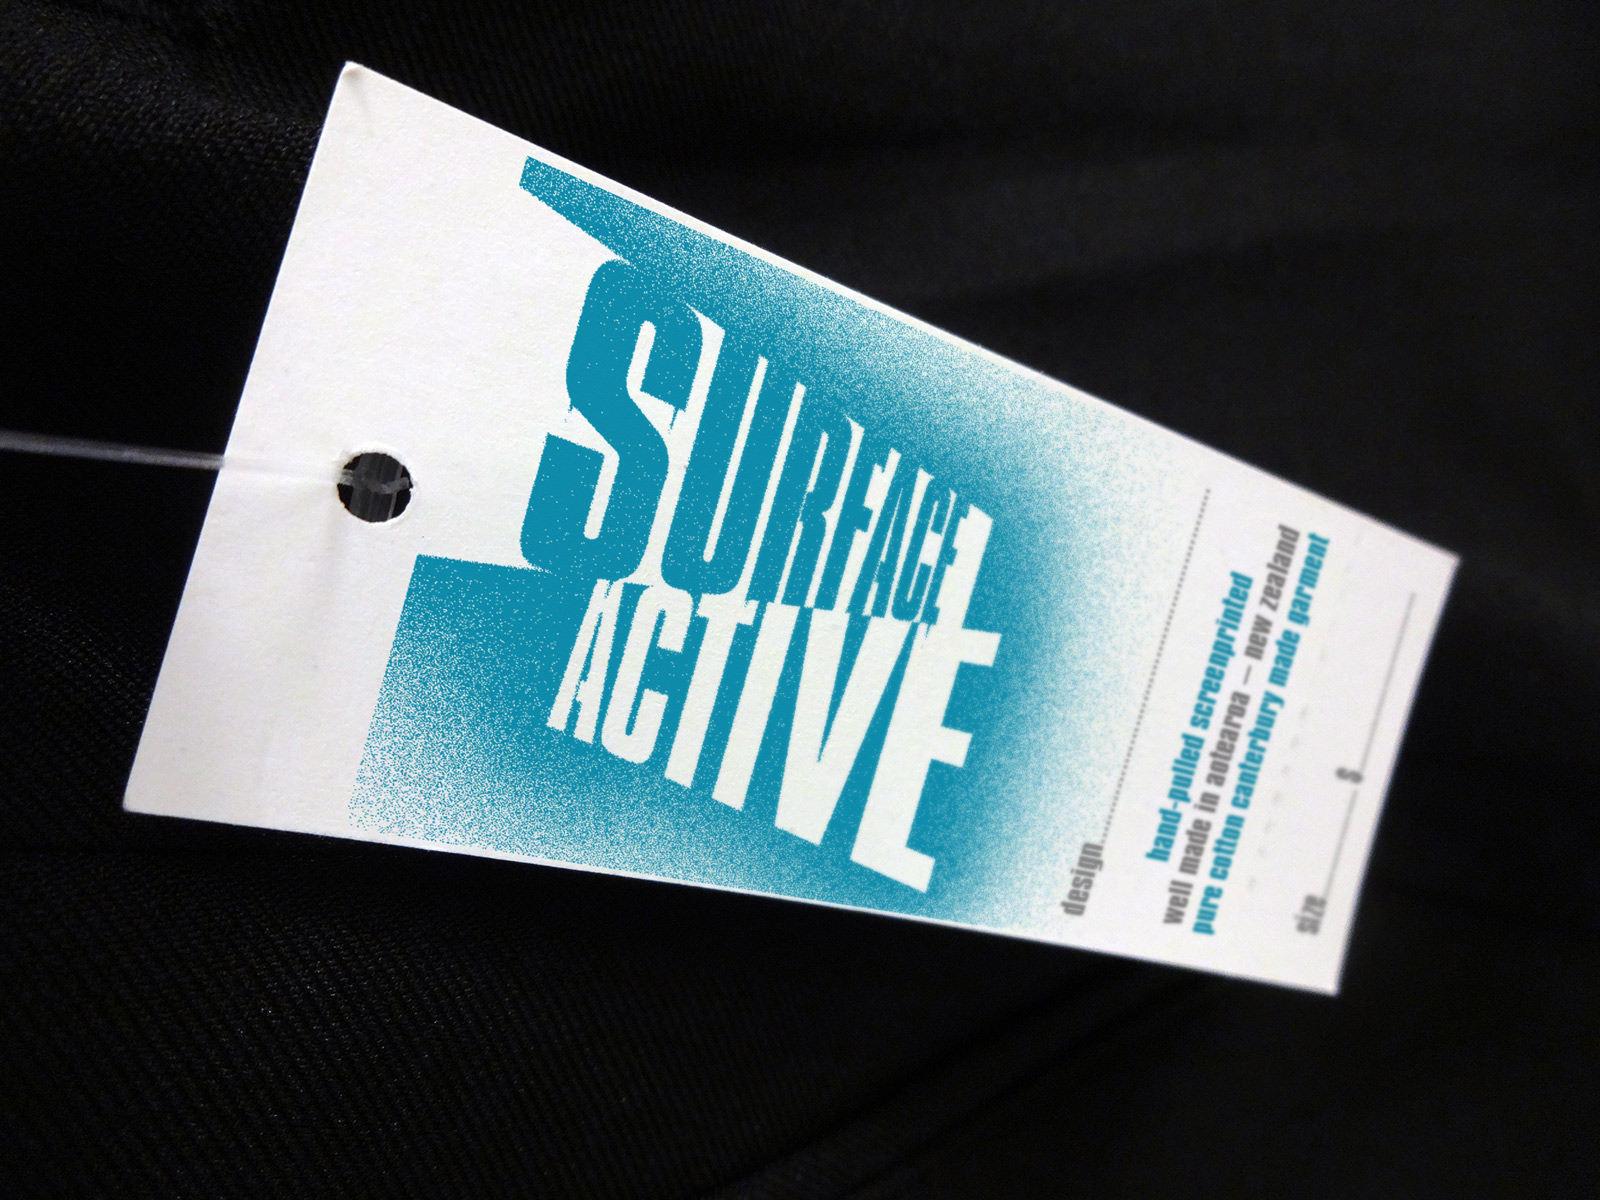 Surface Active T-shirt swingtag front.